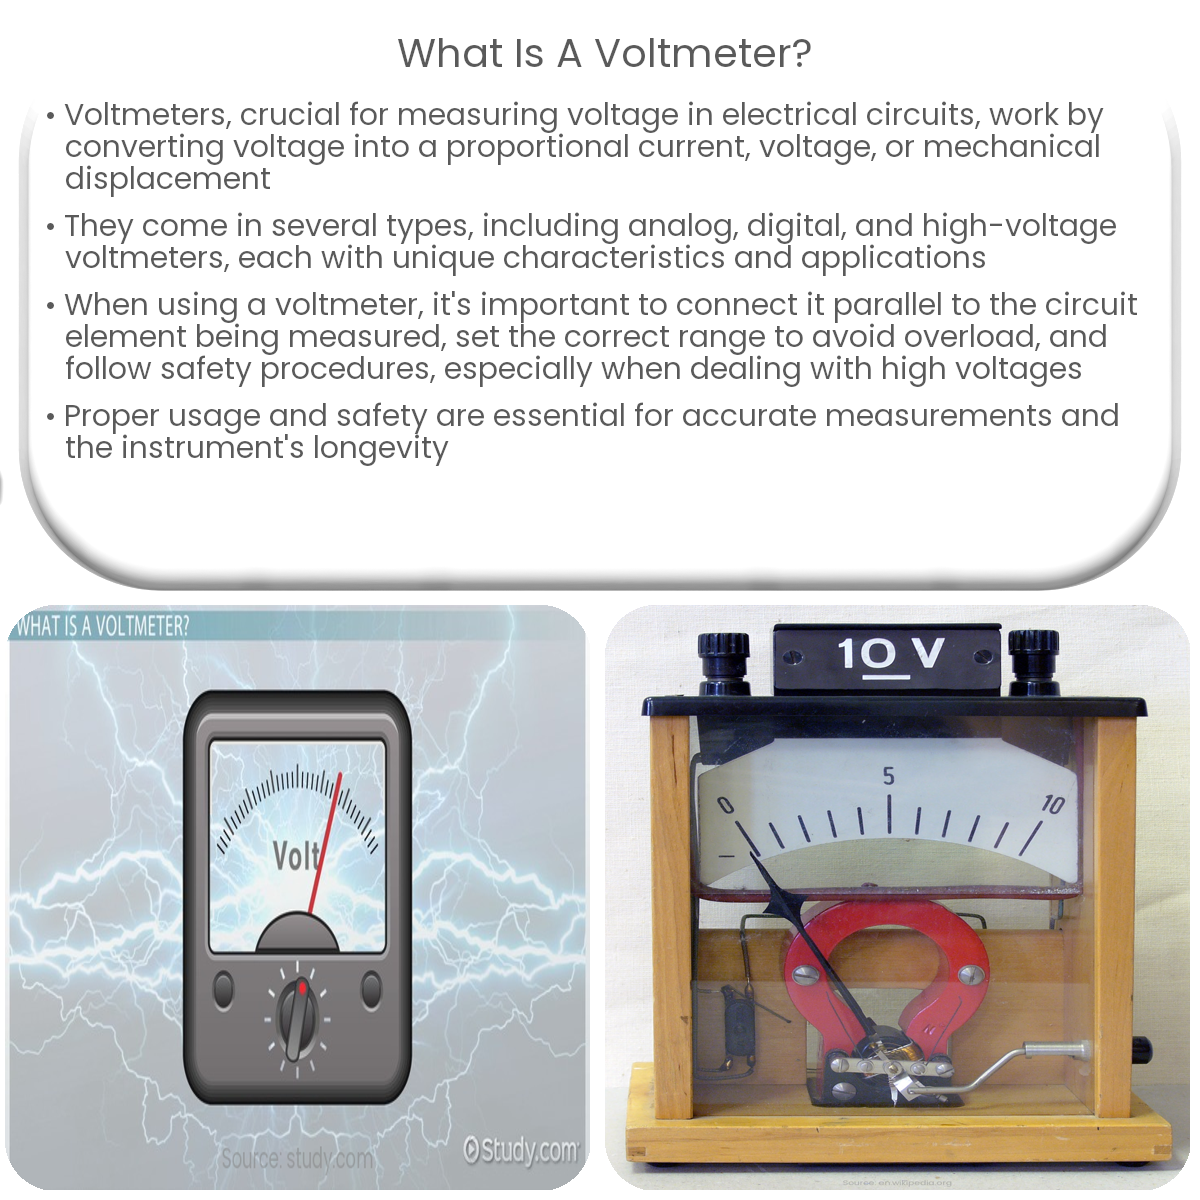 Voltmeter, Definition, Types & Uses - Video & Lesson Transcript